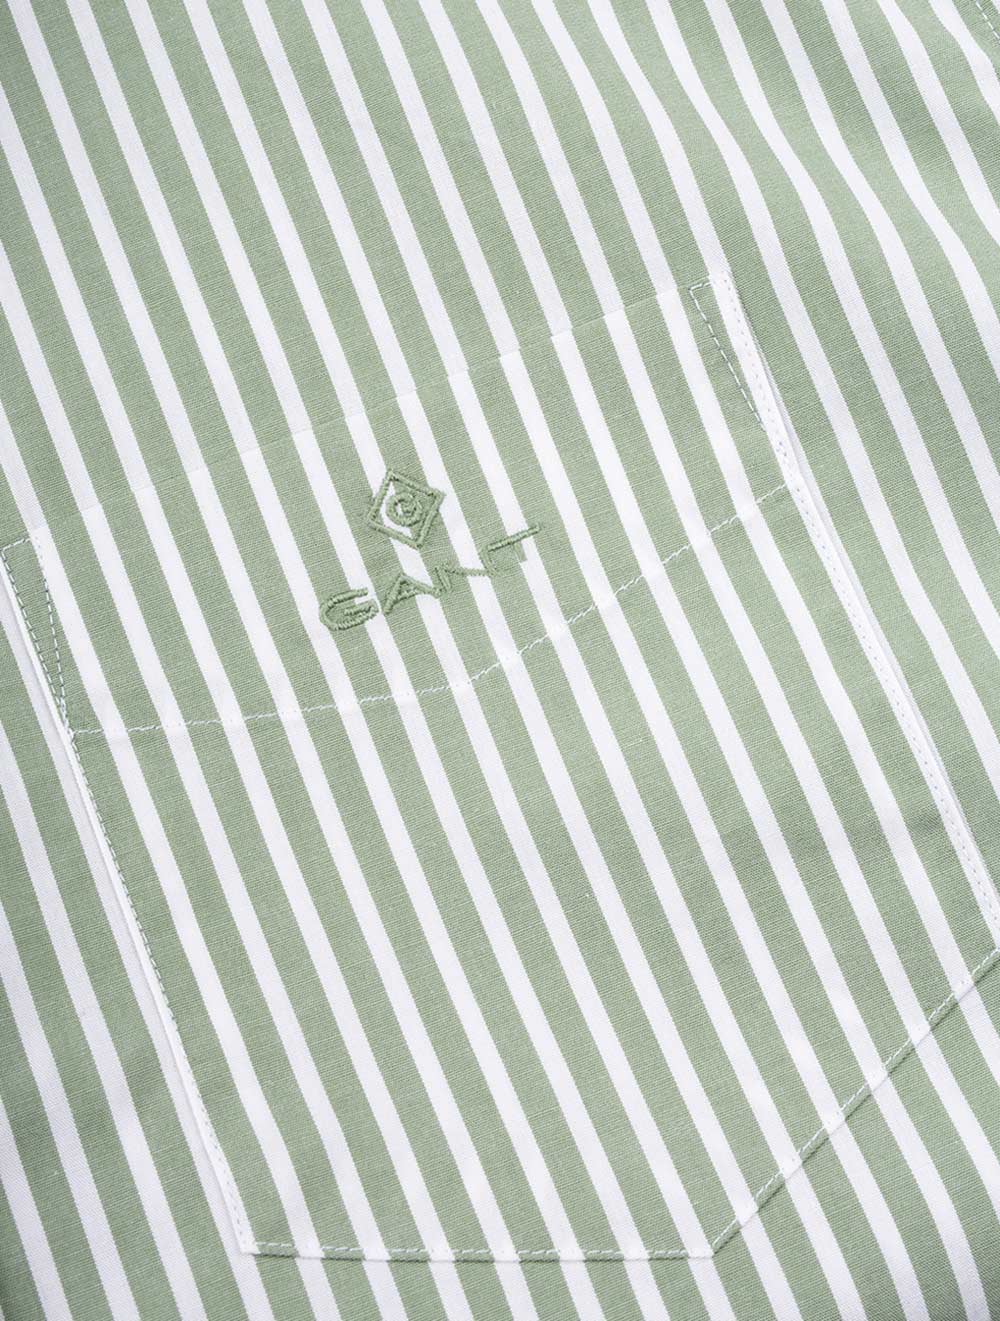 Regular Fit Stripe Short Sleeve Broadcloth Shirt Kalamata Green